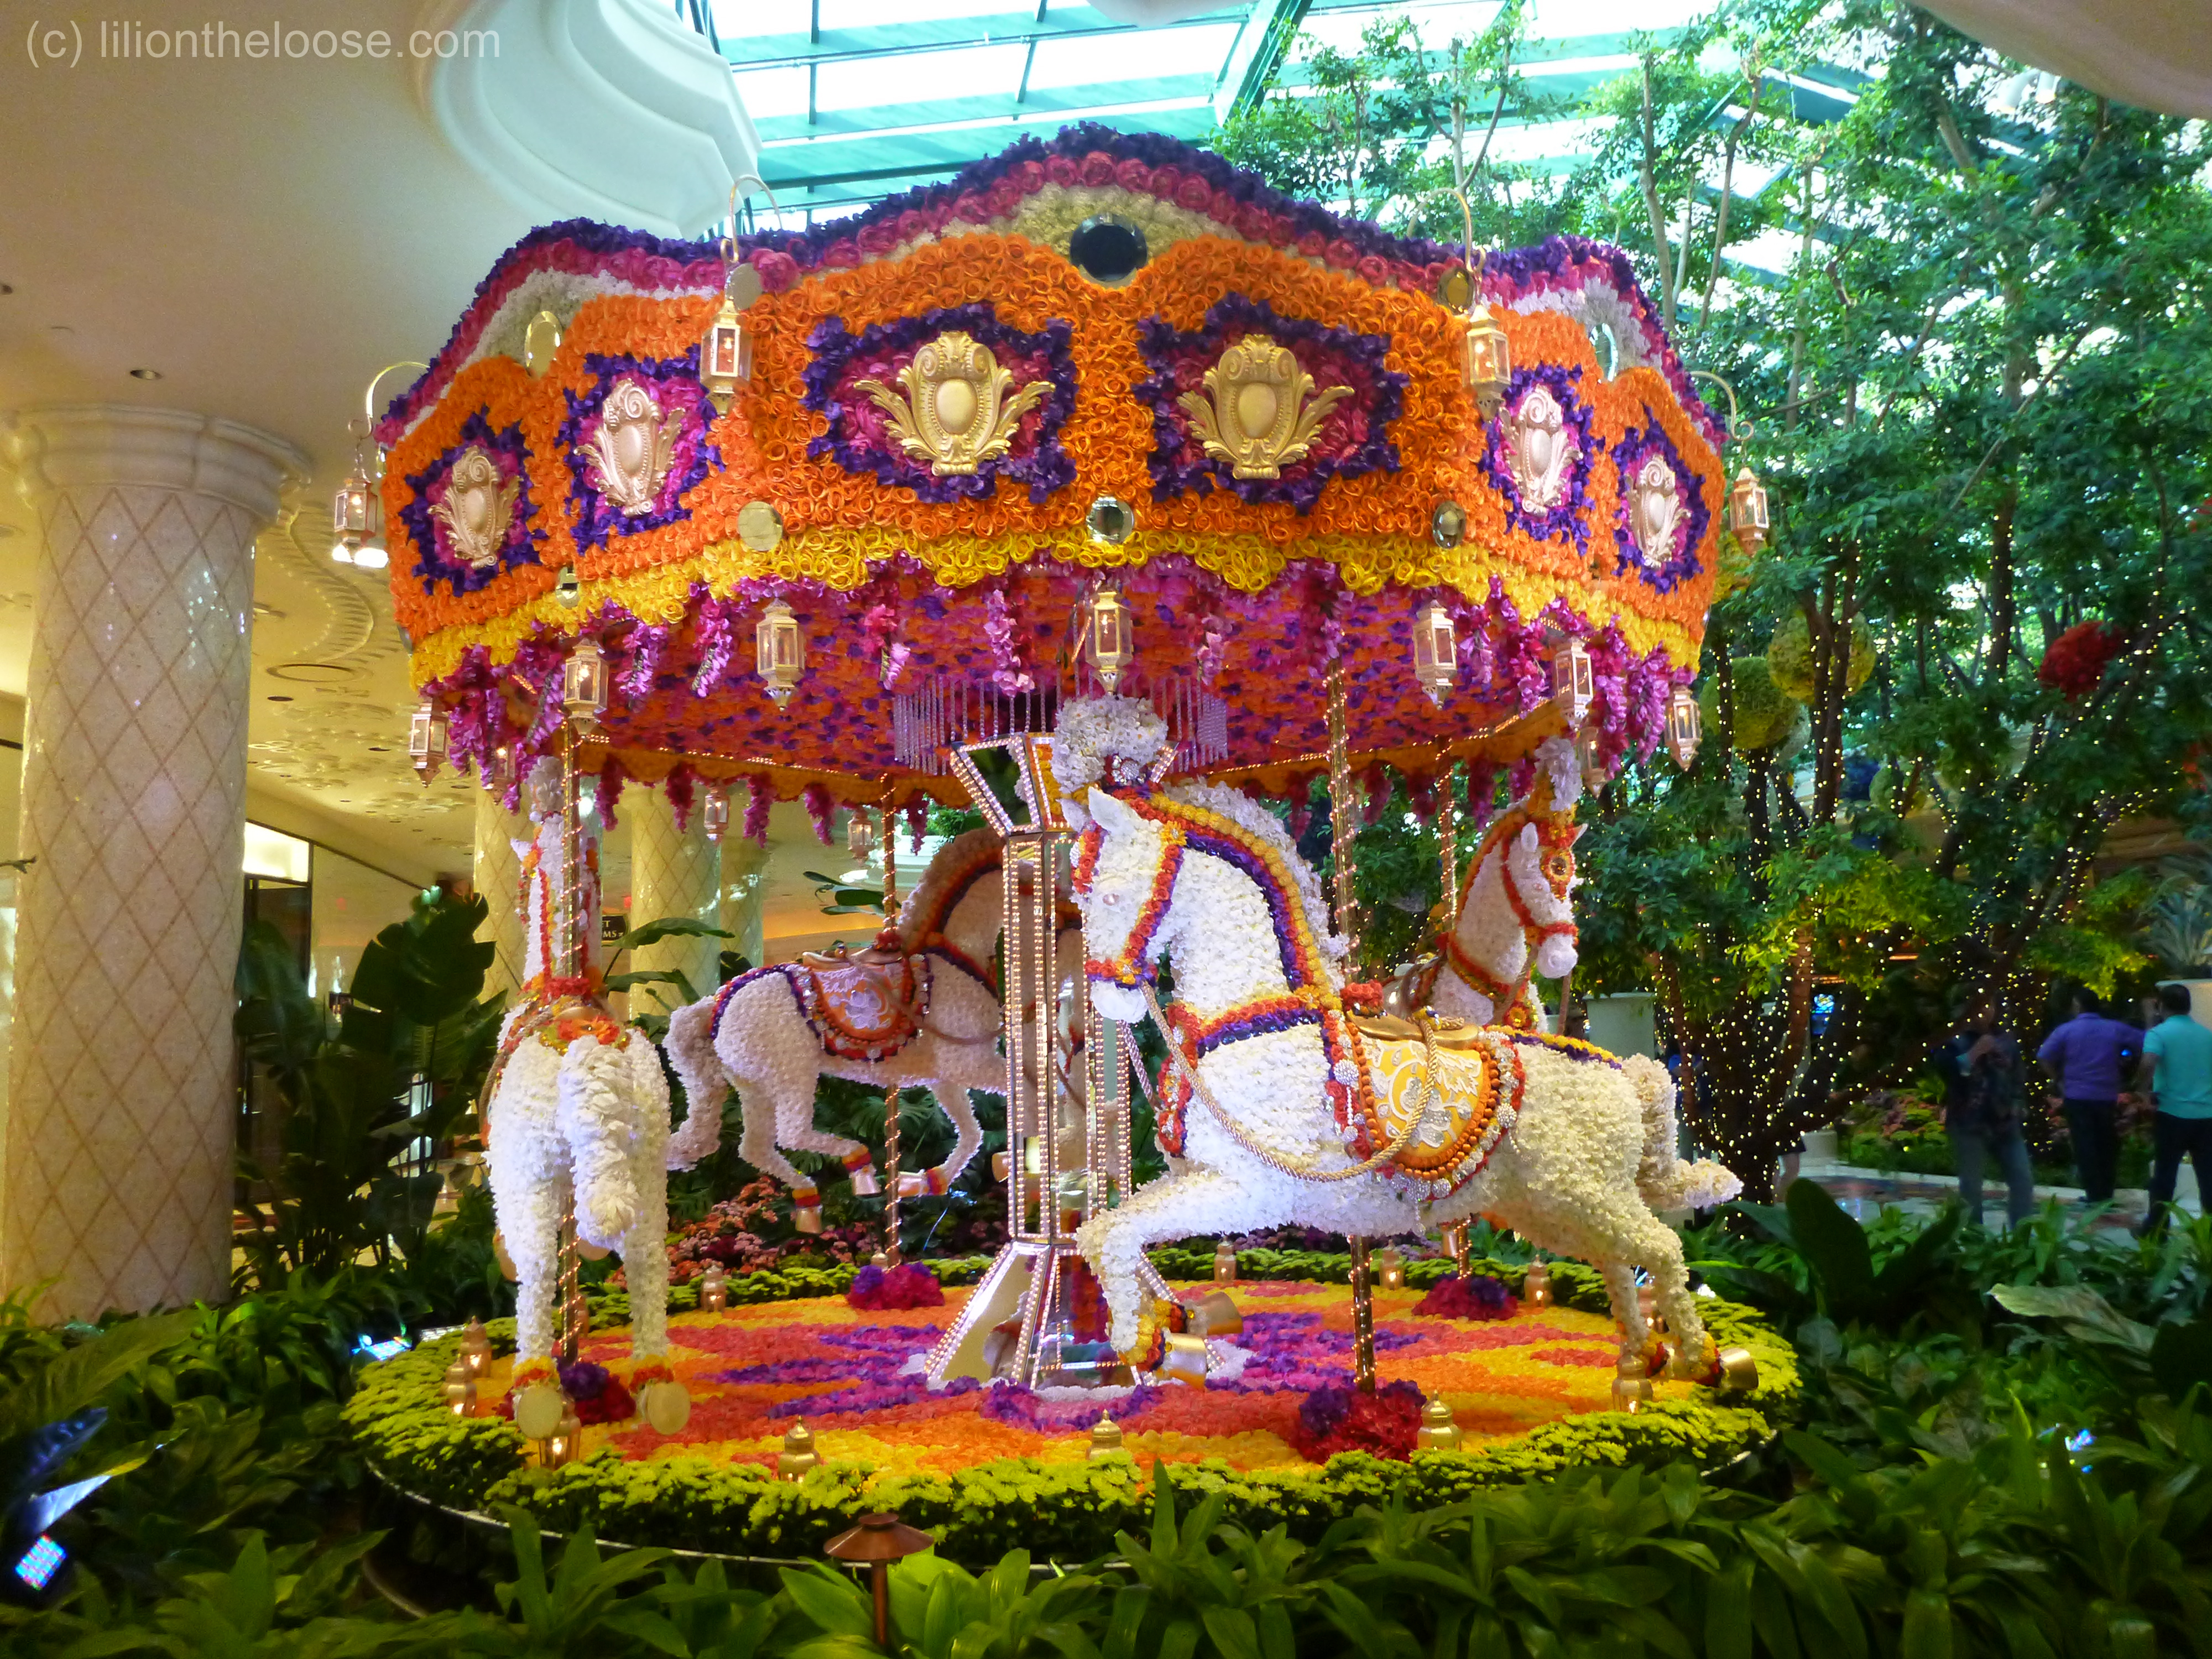 Wynn Carousel made of flowers 